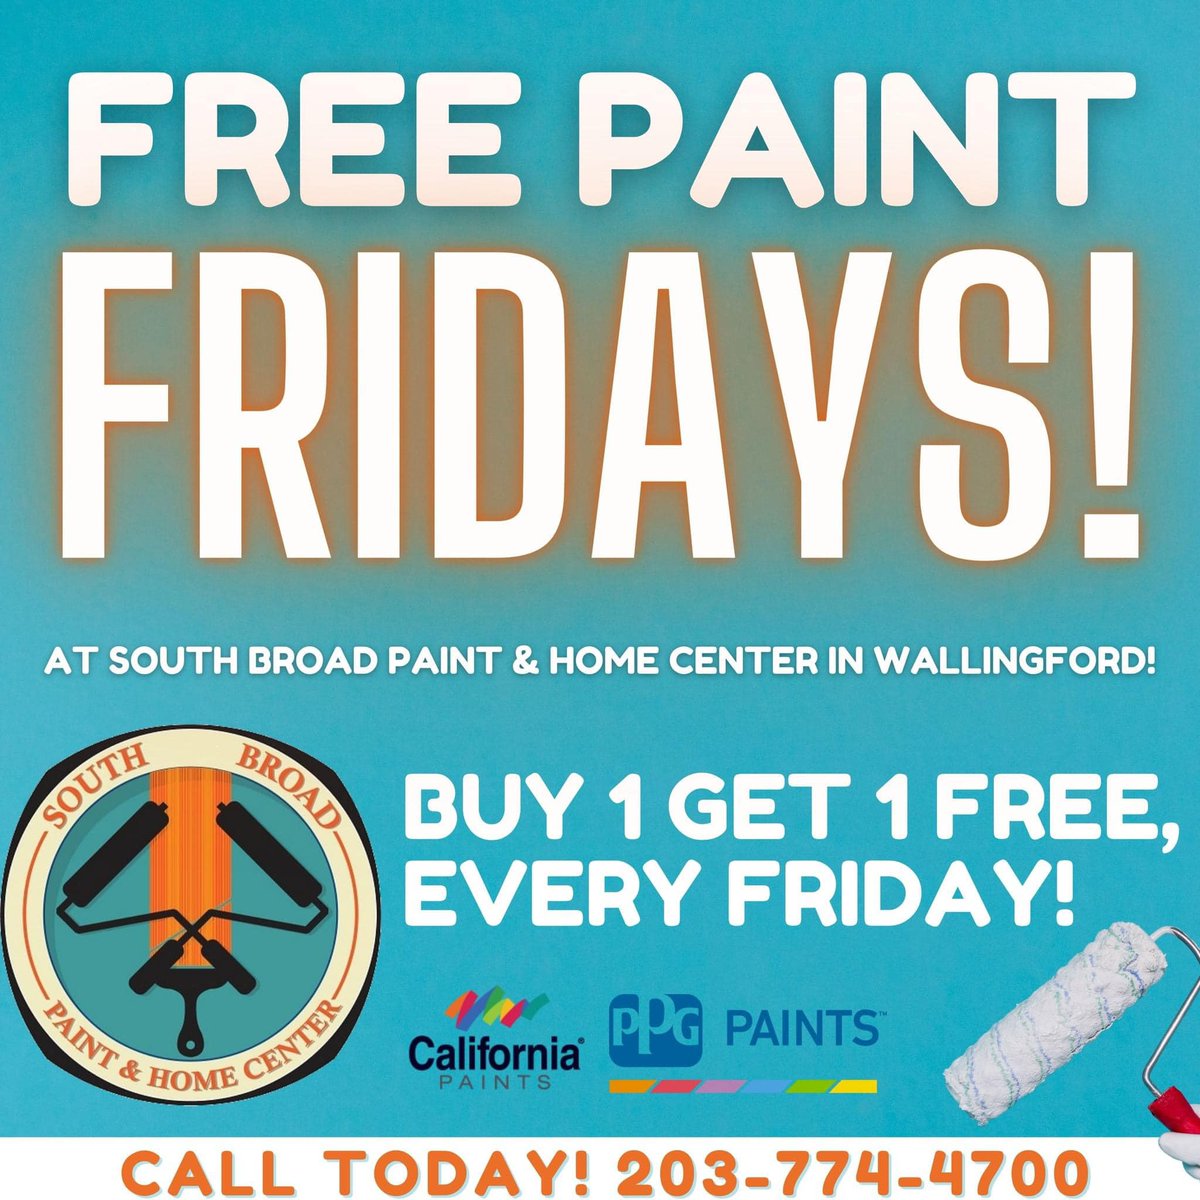 🚨 Buy one gallon of paint, get one FREE tomorrow 🚨 
🔗southbroadpaintcenter.com
#southbroadpaintcenter #freepaintfridays #southbroadpaint #paintcenter #paintshop #wallingfordct #paintsupplies #diy #paint #ppgpaints #californiapaints